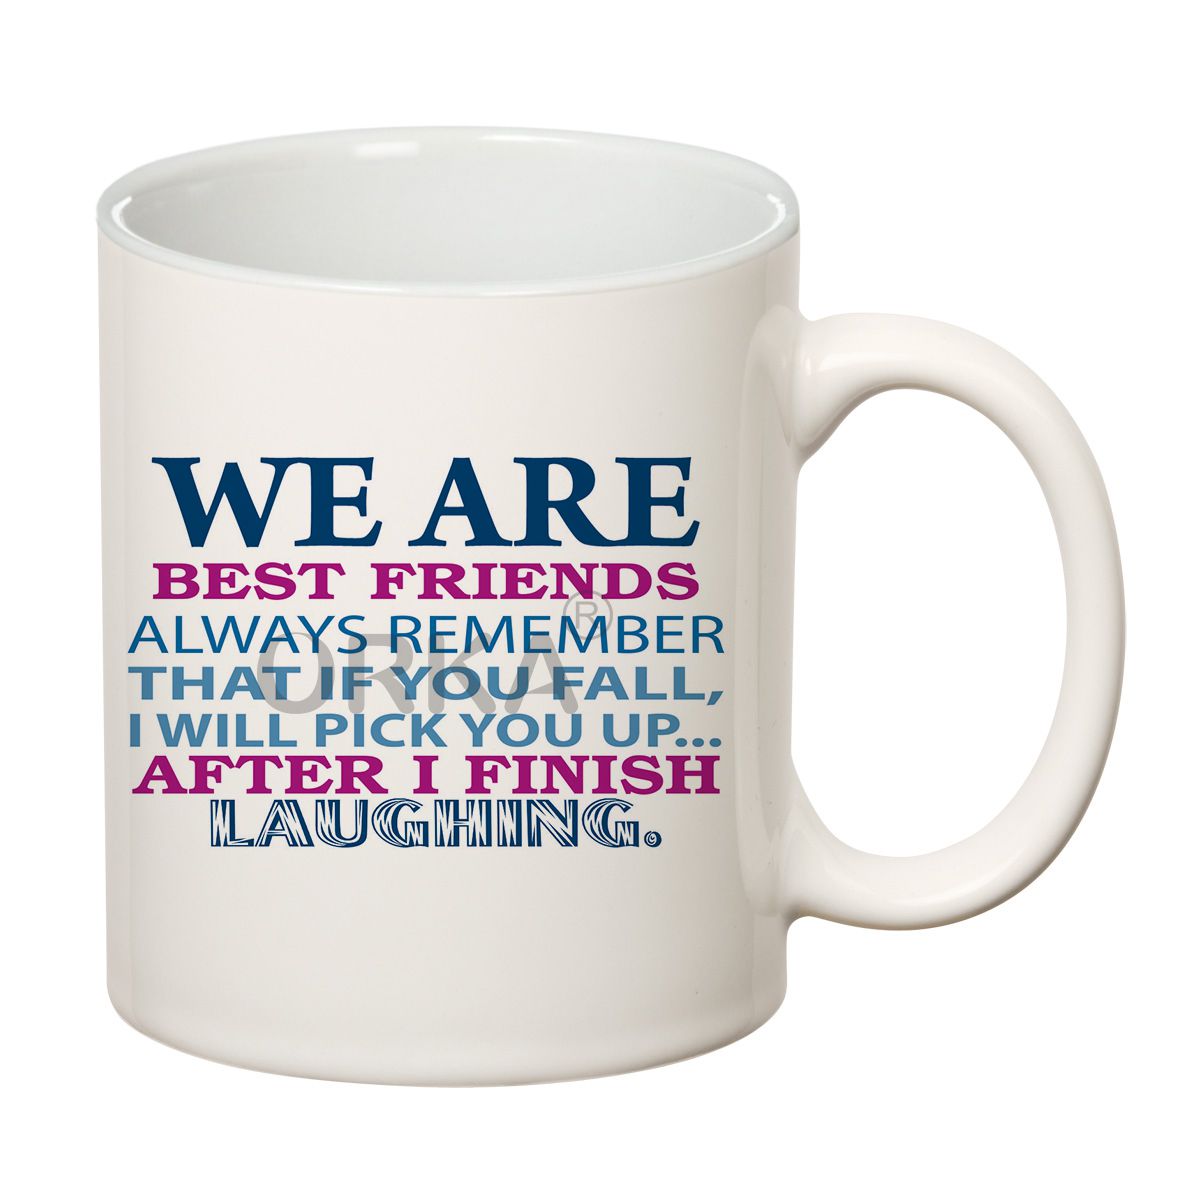 ORKA Coffee Mug Quotes Printed( Best Friend) Theme 11 Oz   